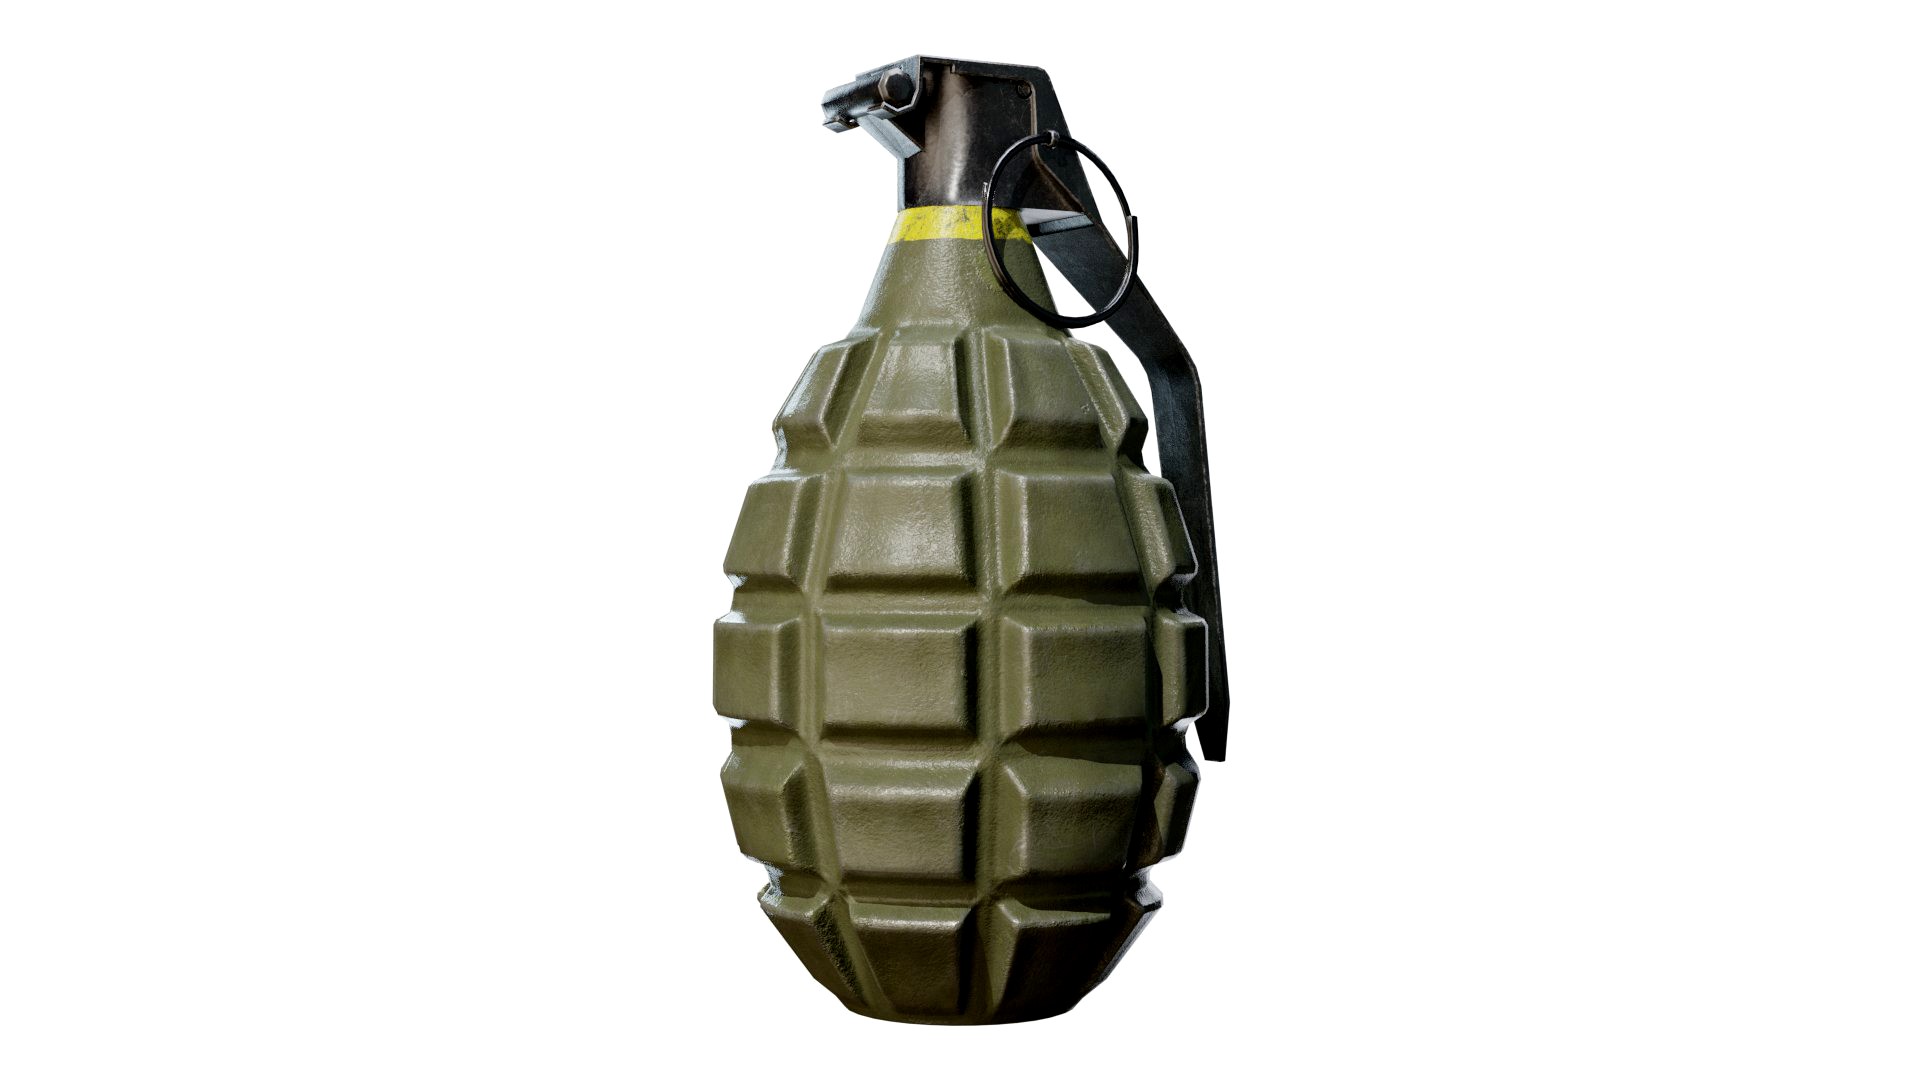 MK2 frag grenade